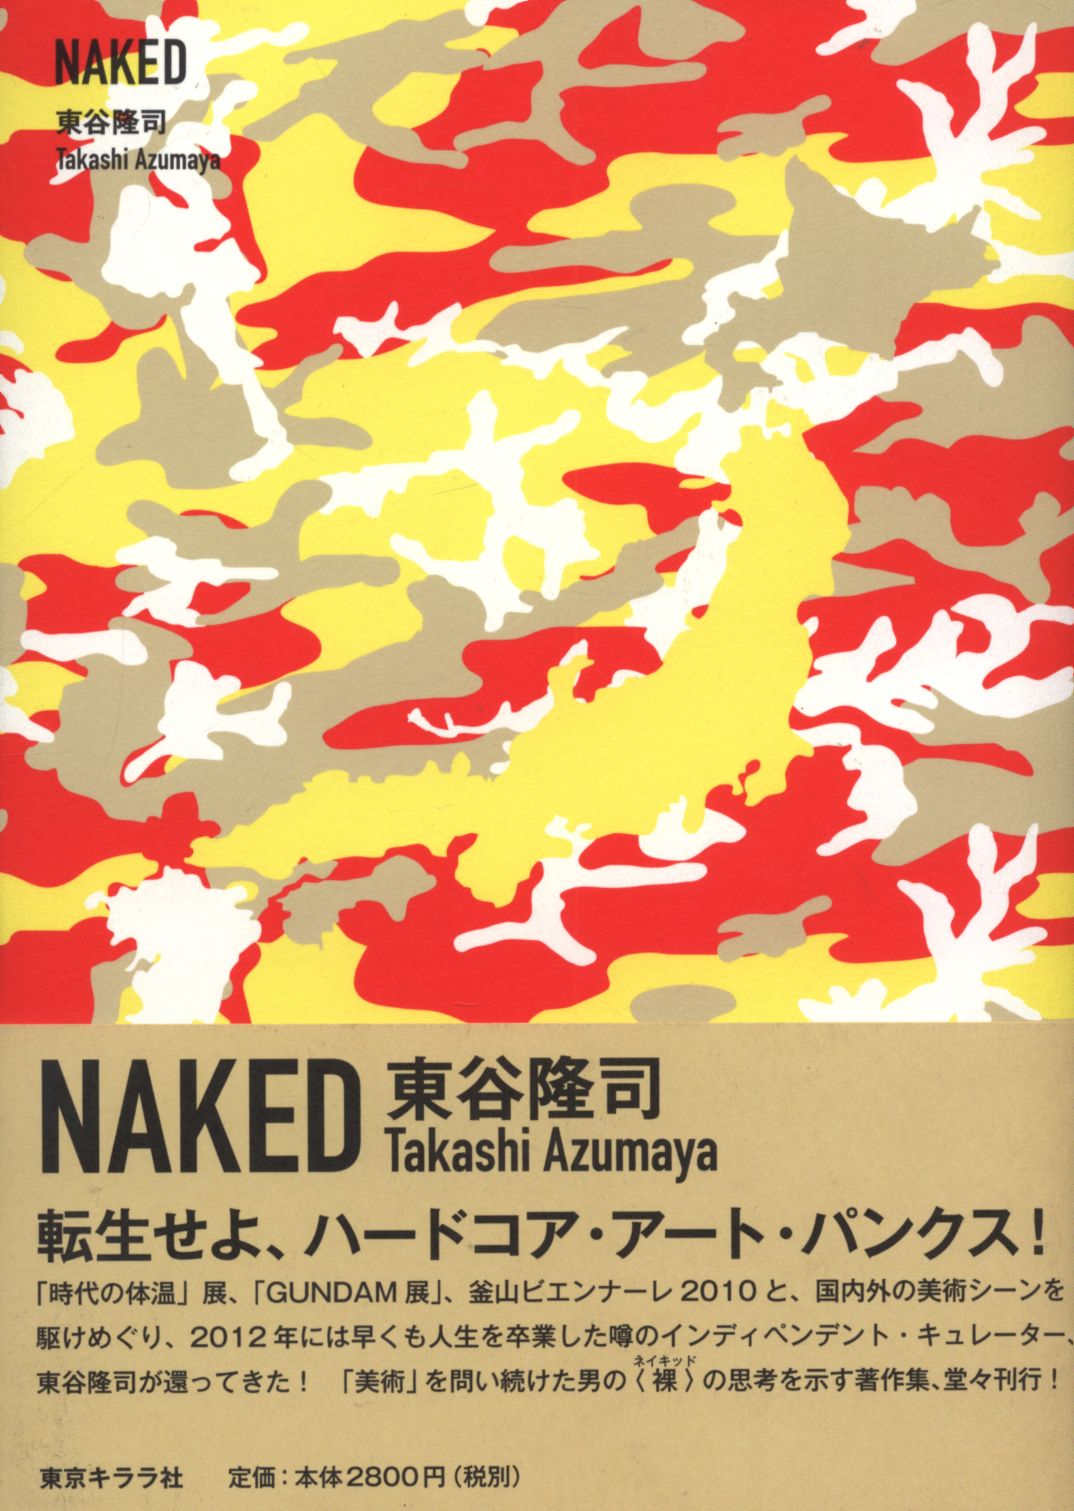 Tokyo Kirara Company Takashi Azumaya Naked Mandarake Online Shop